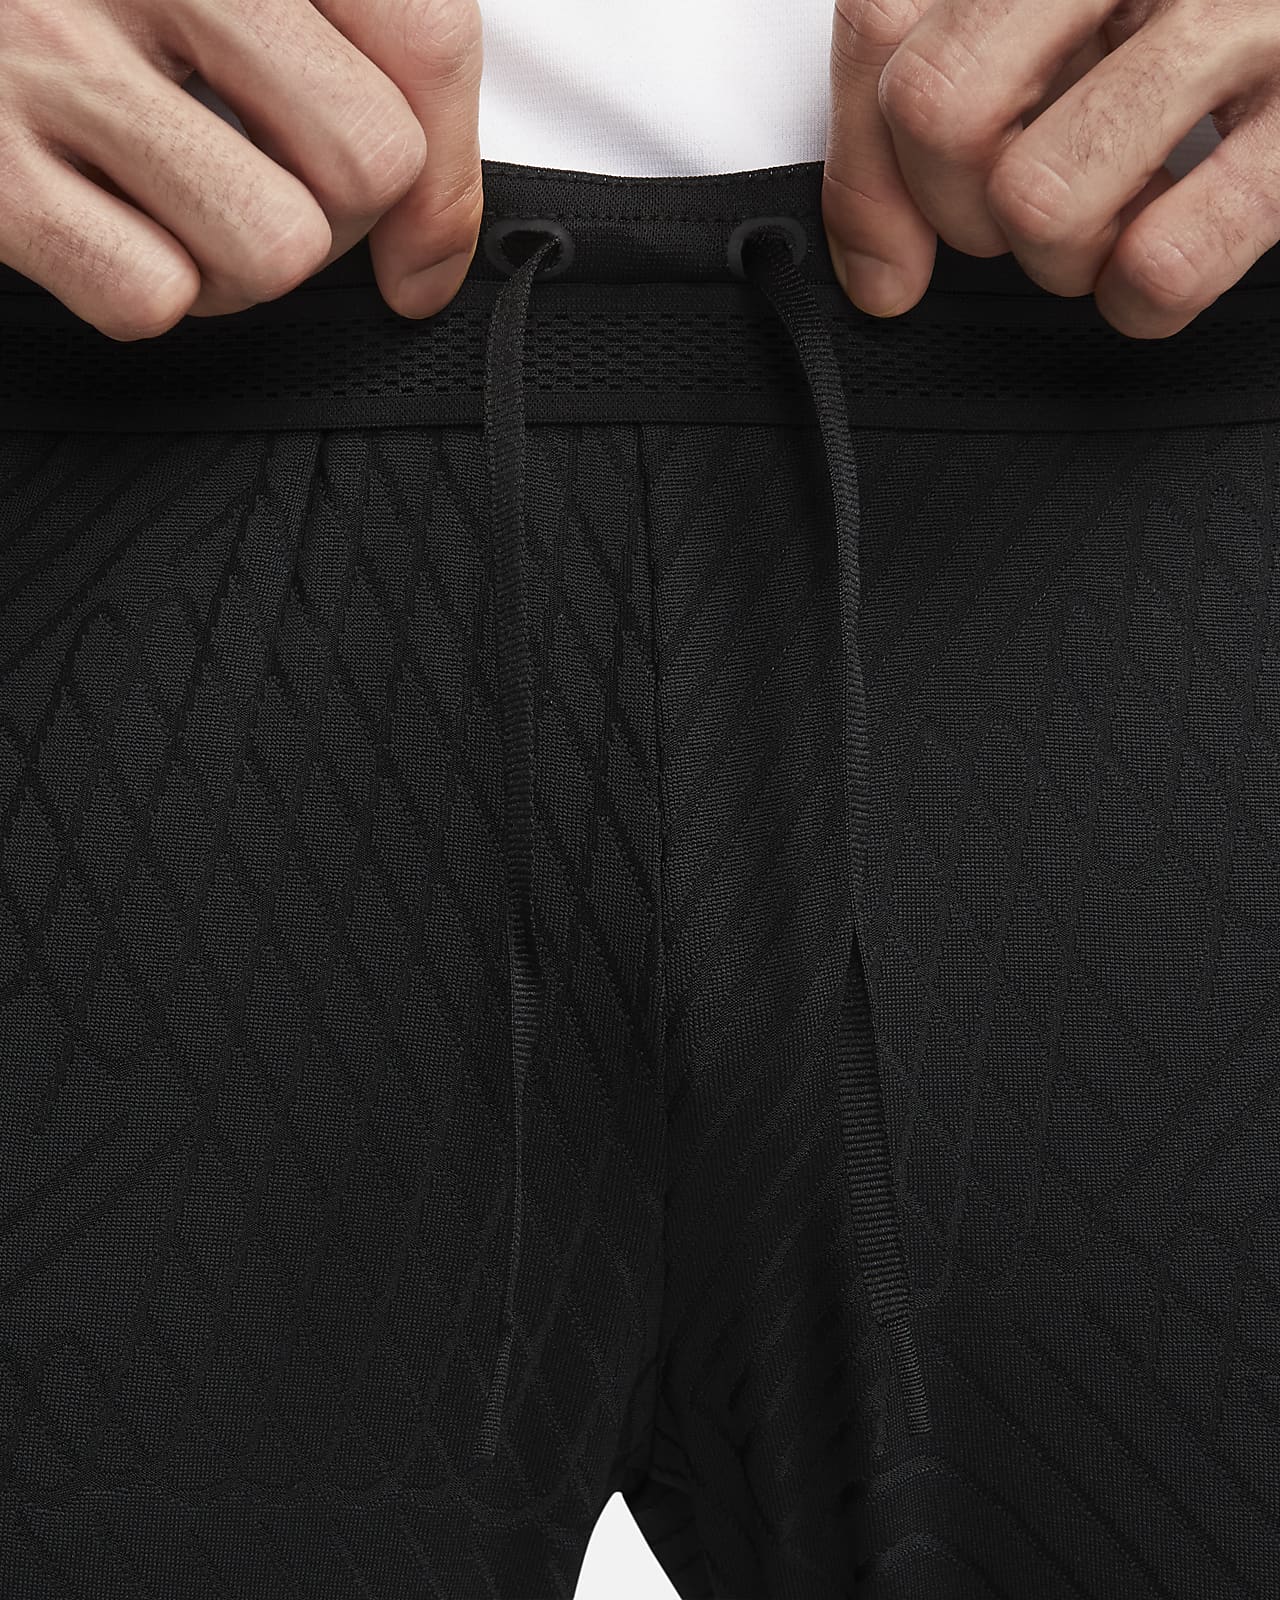 Nike Dri-FIT Academy Men's Knit Soccer Pants